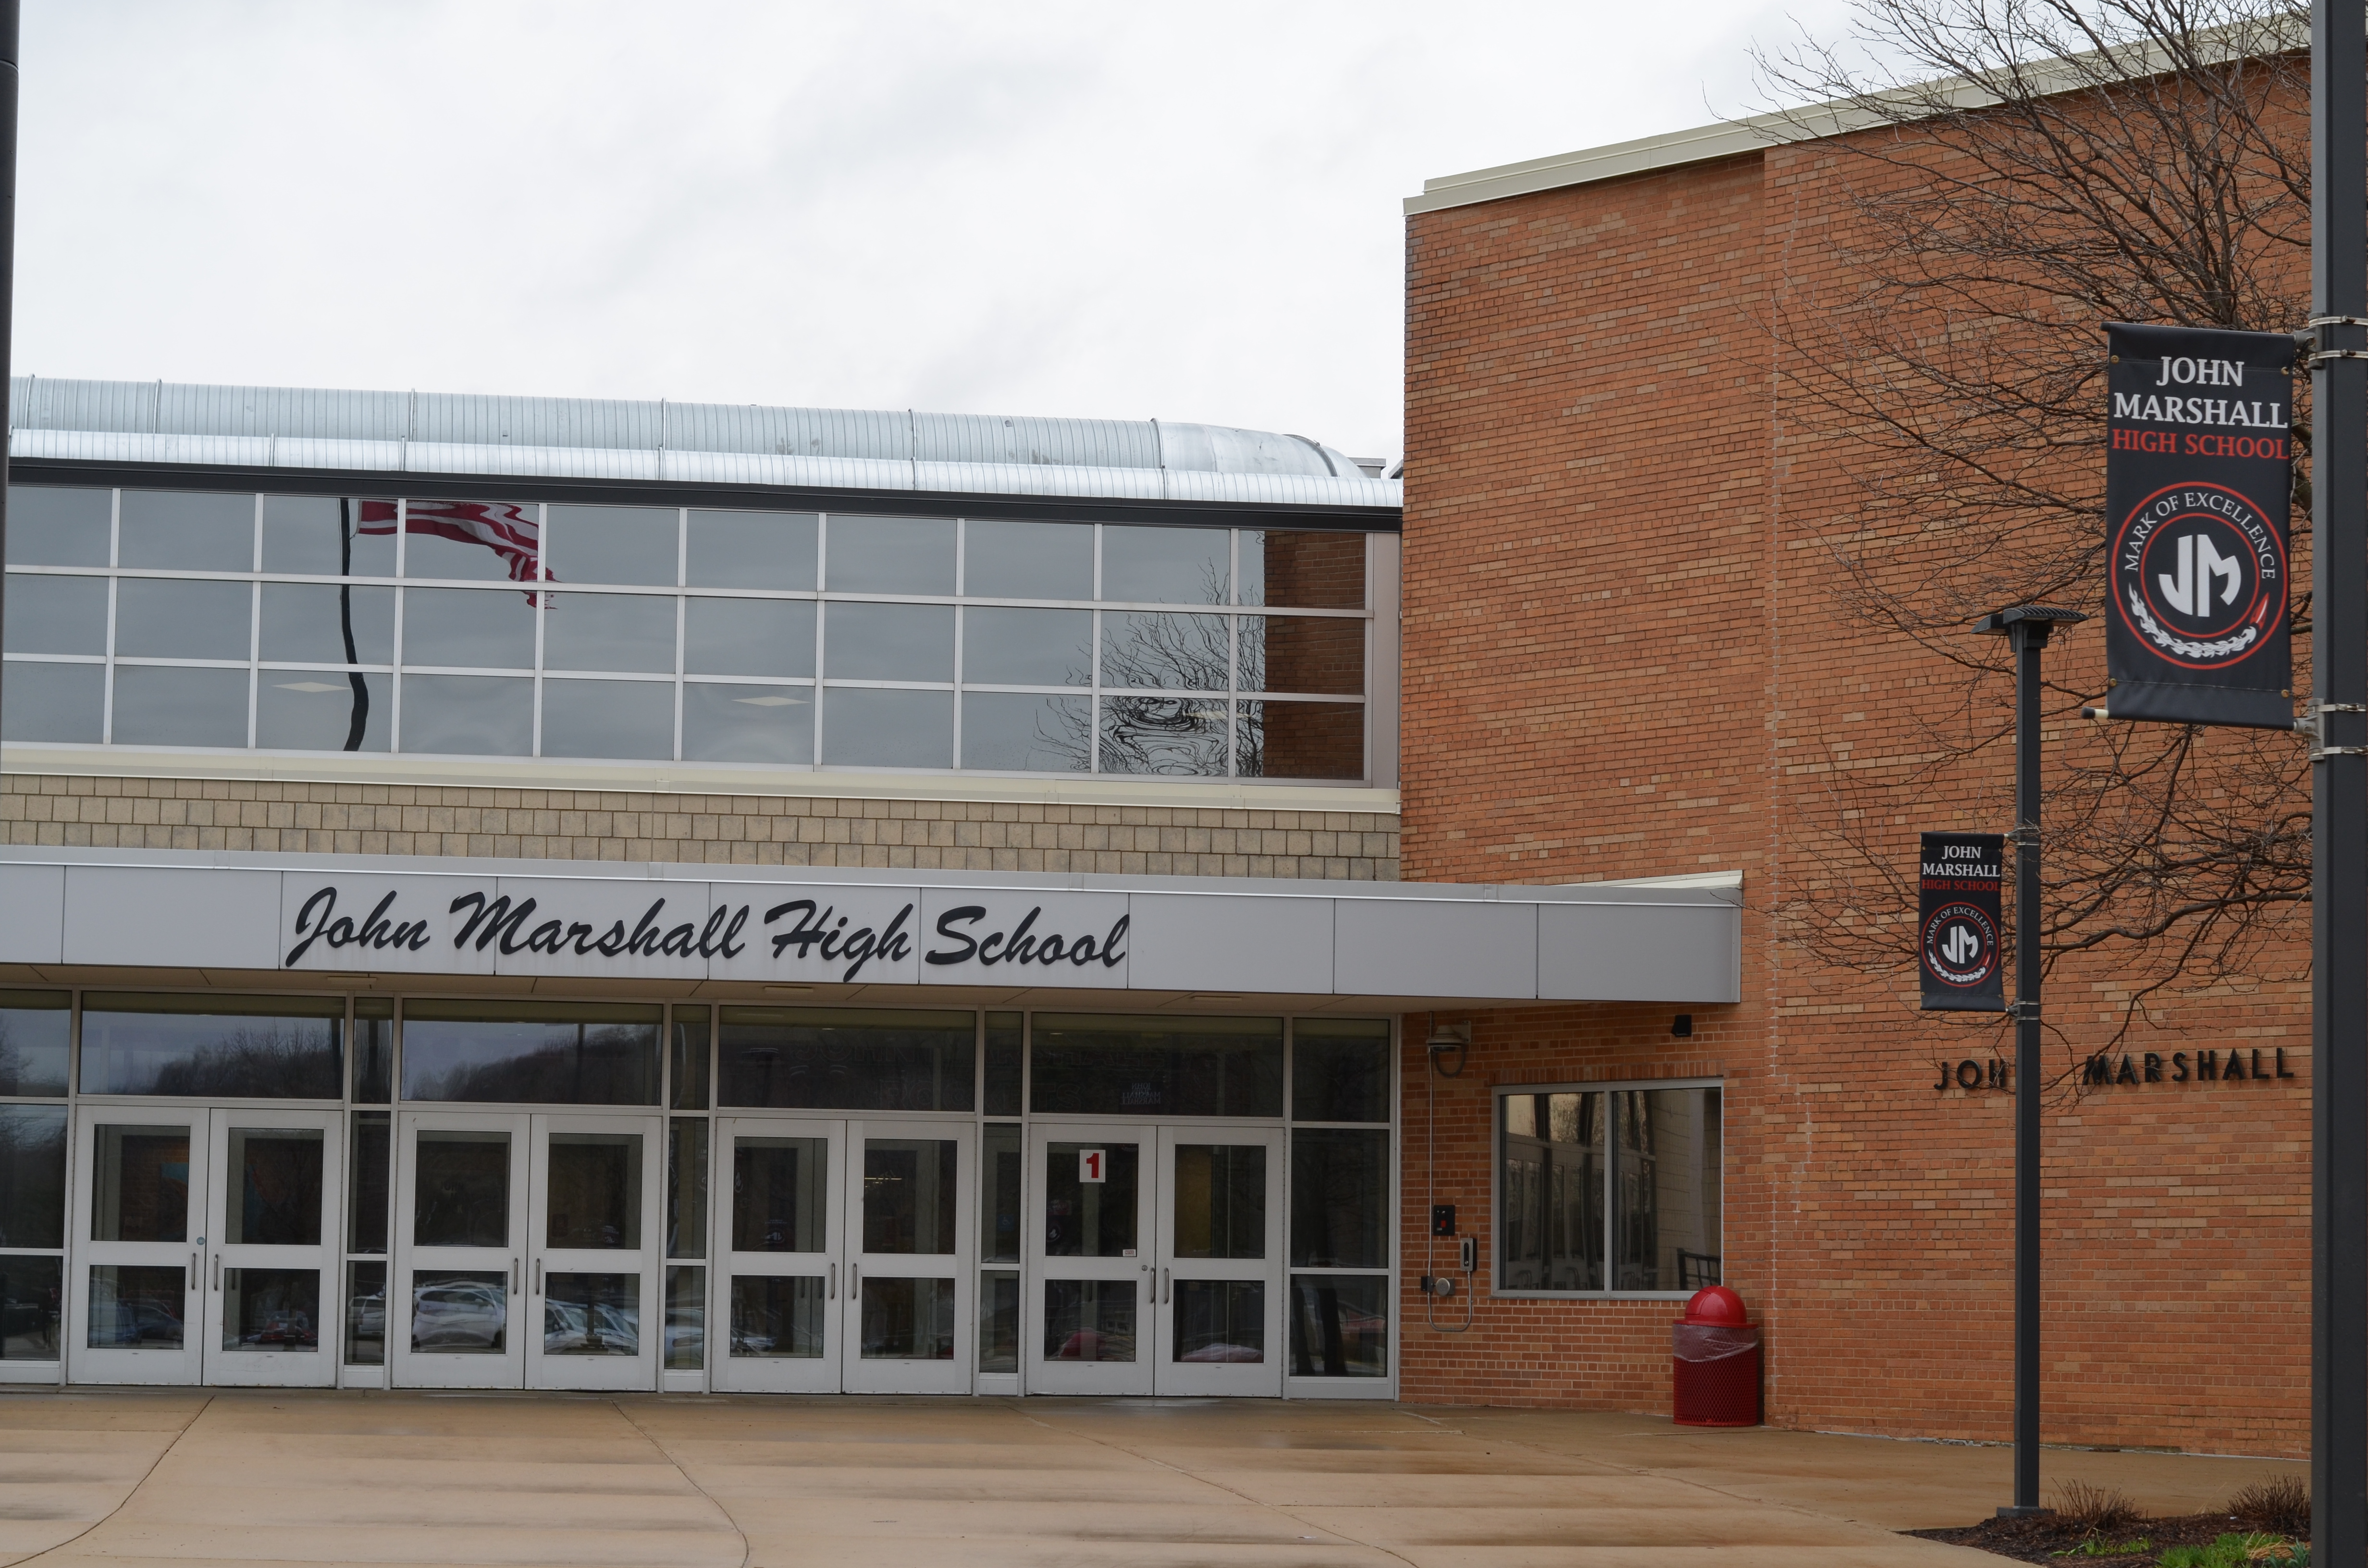 Exterior of John Marshall High School Front entrance